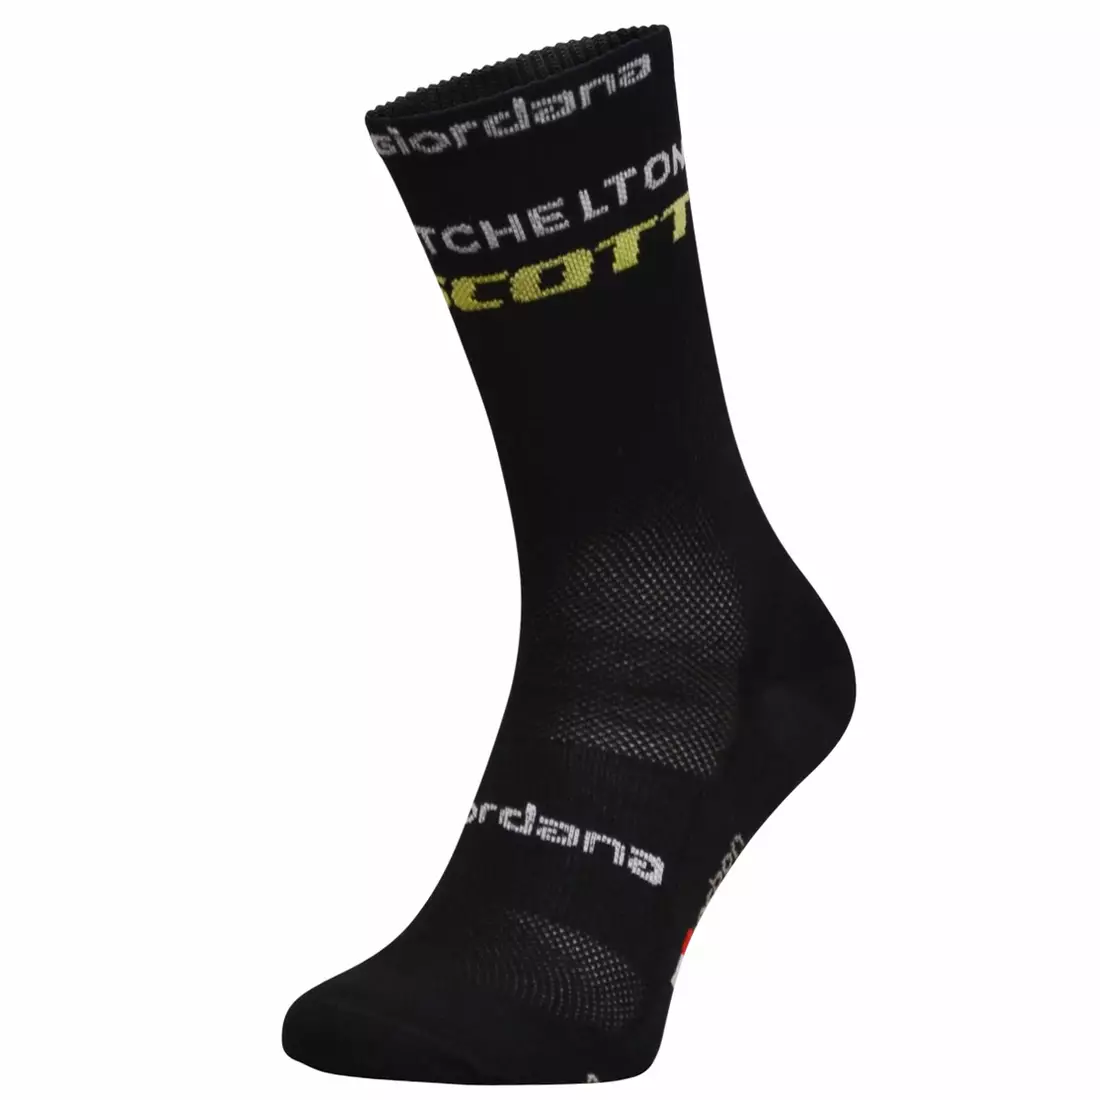 GIORDANA PRO TEAM MITCHELTON SCOTT 2018 tall cycling socks, black